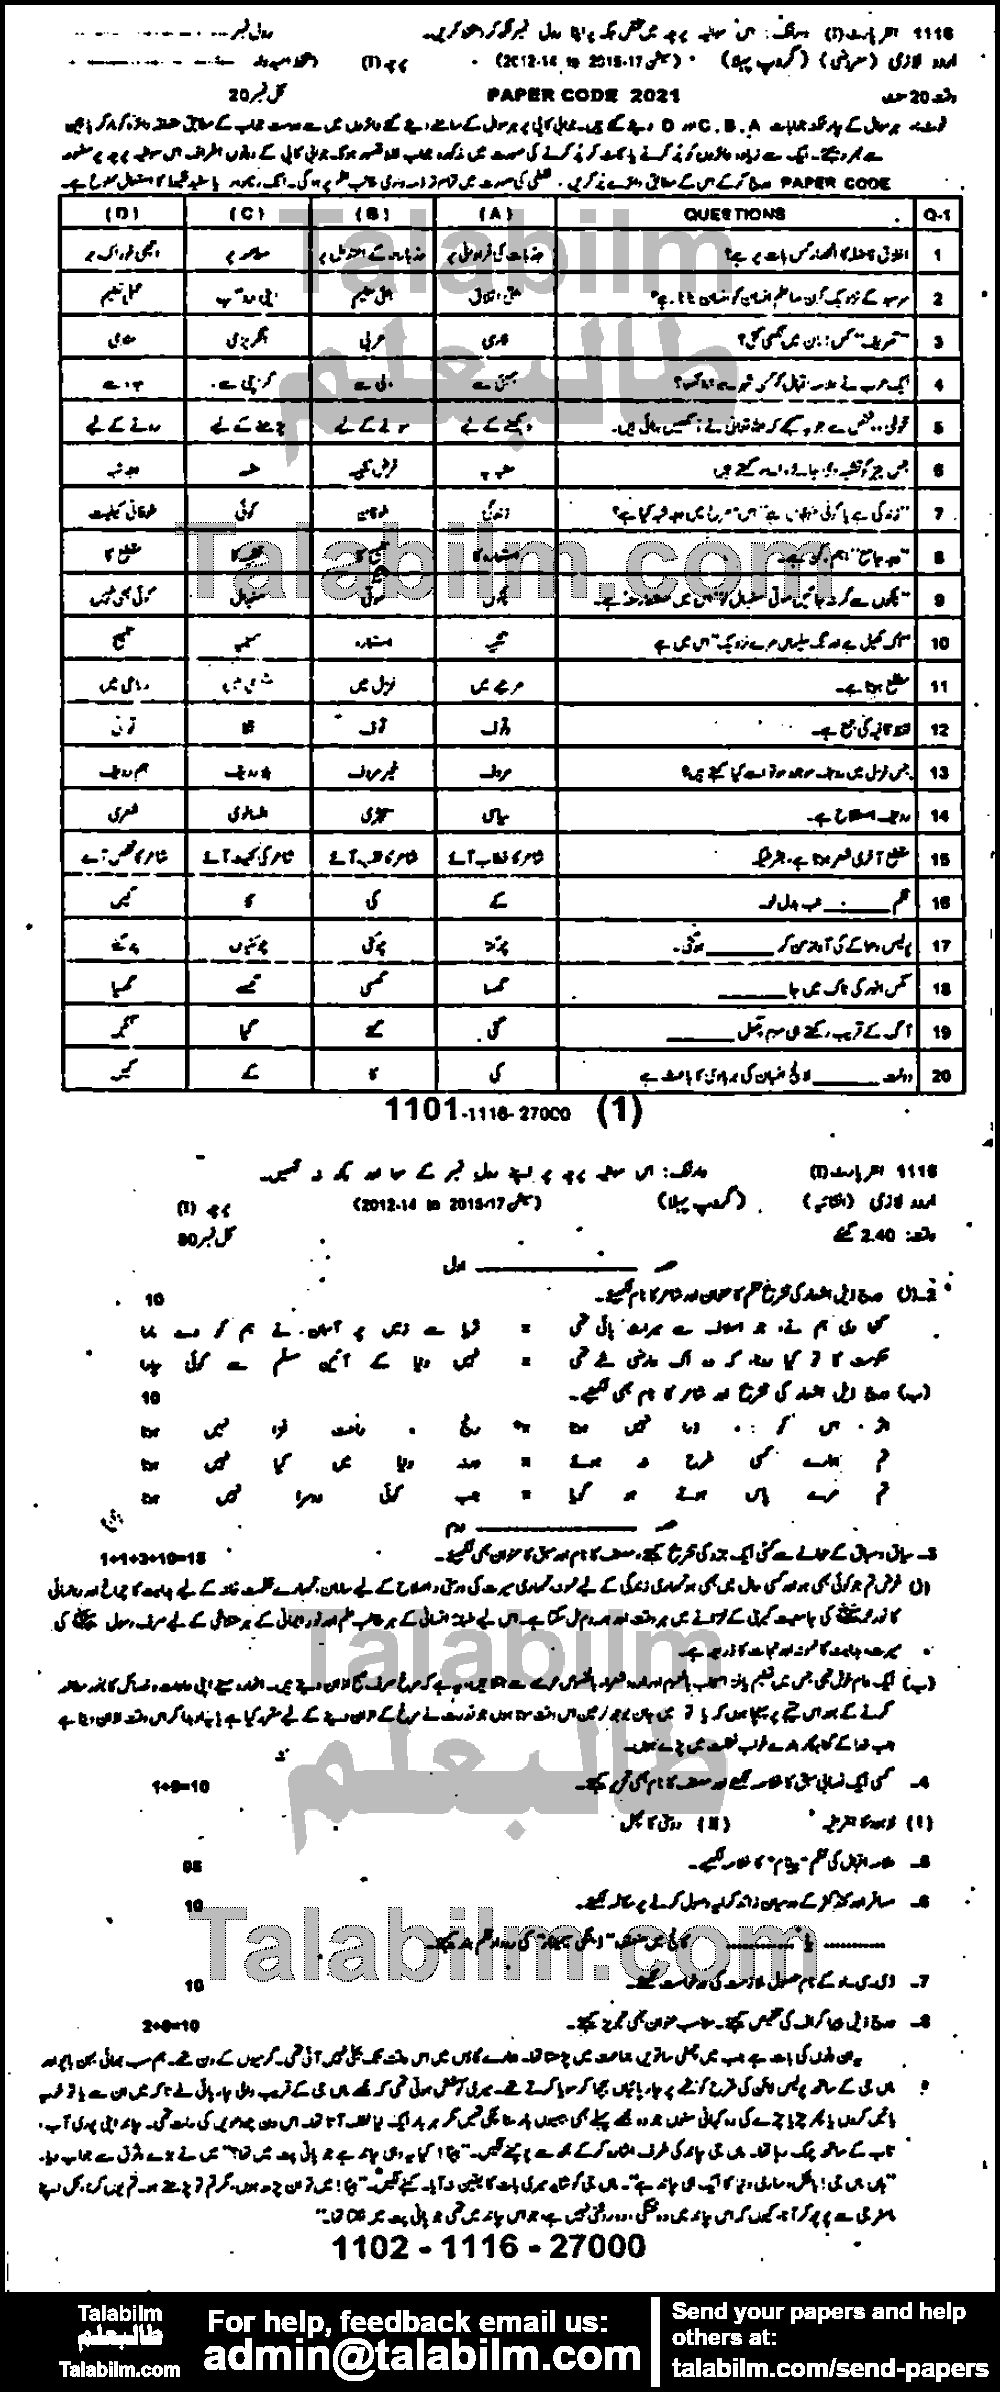 Urdu 0 past paper for Group-I 2016